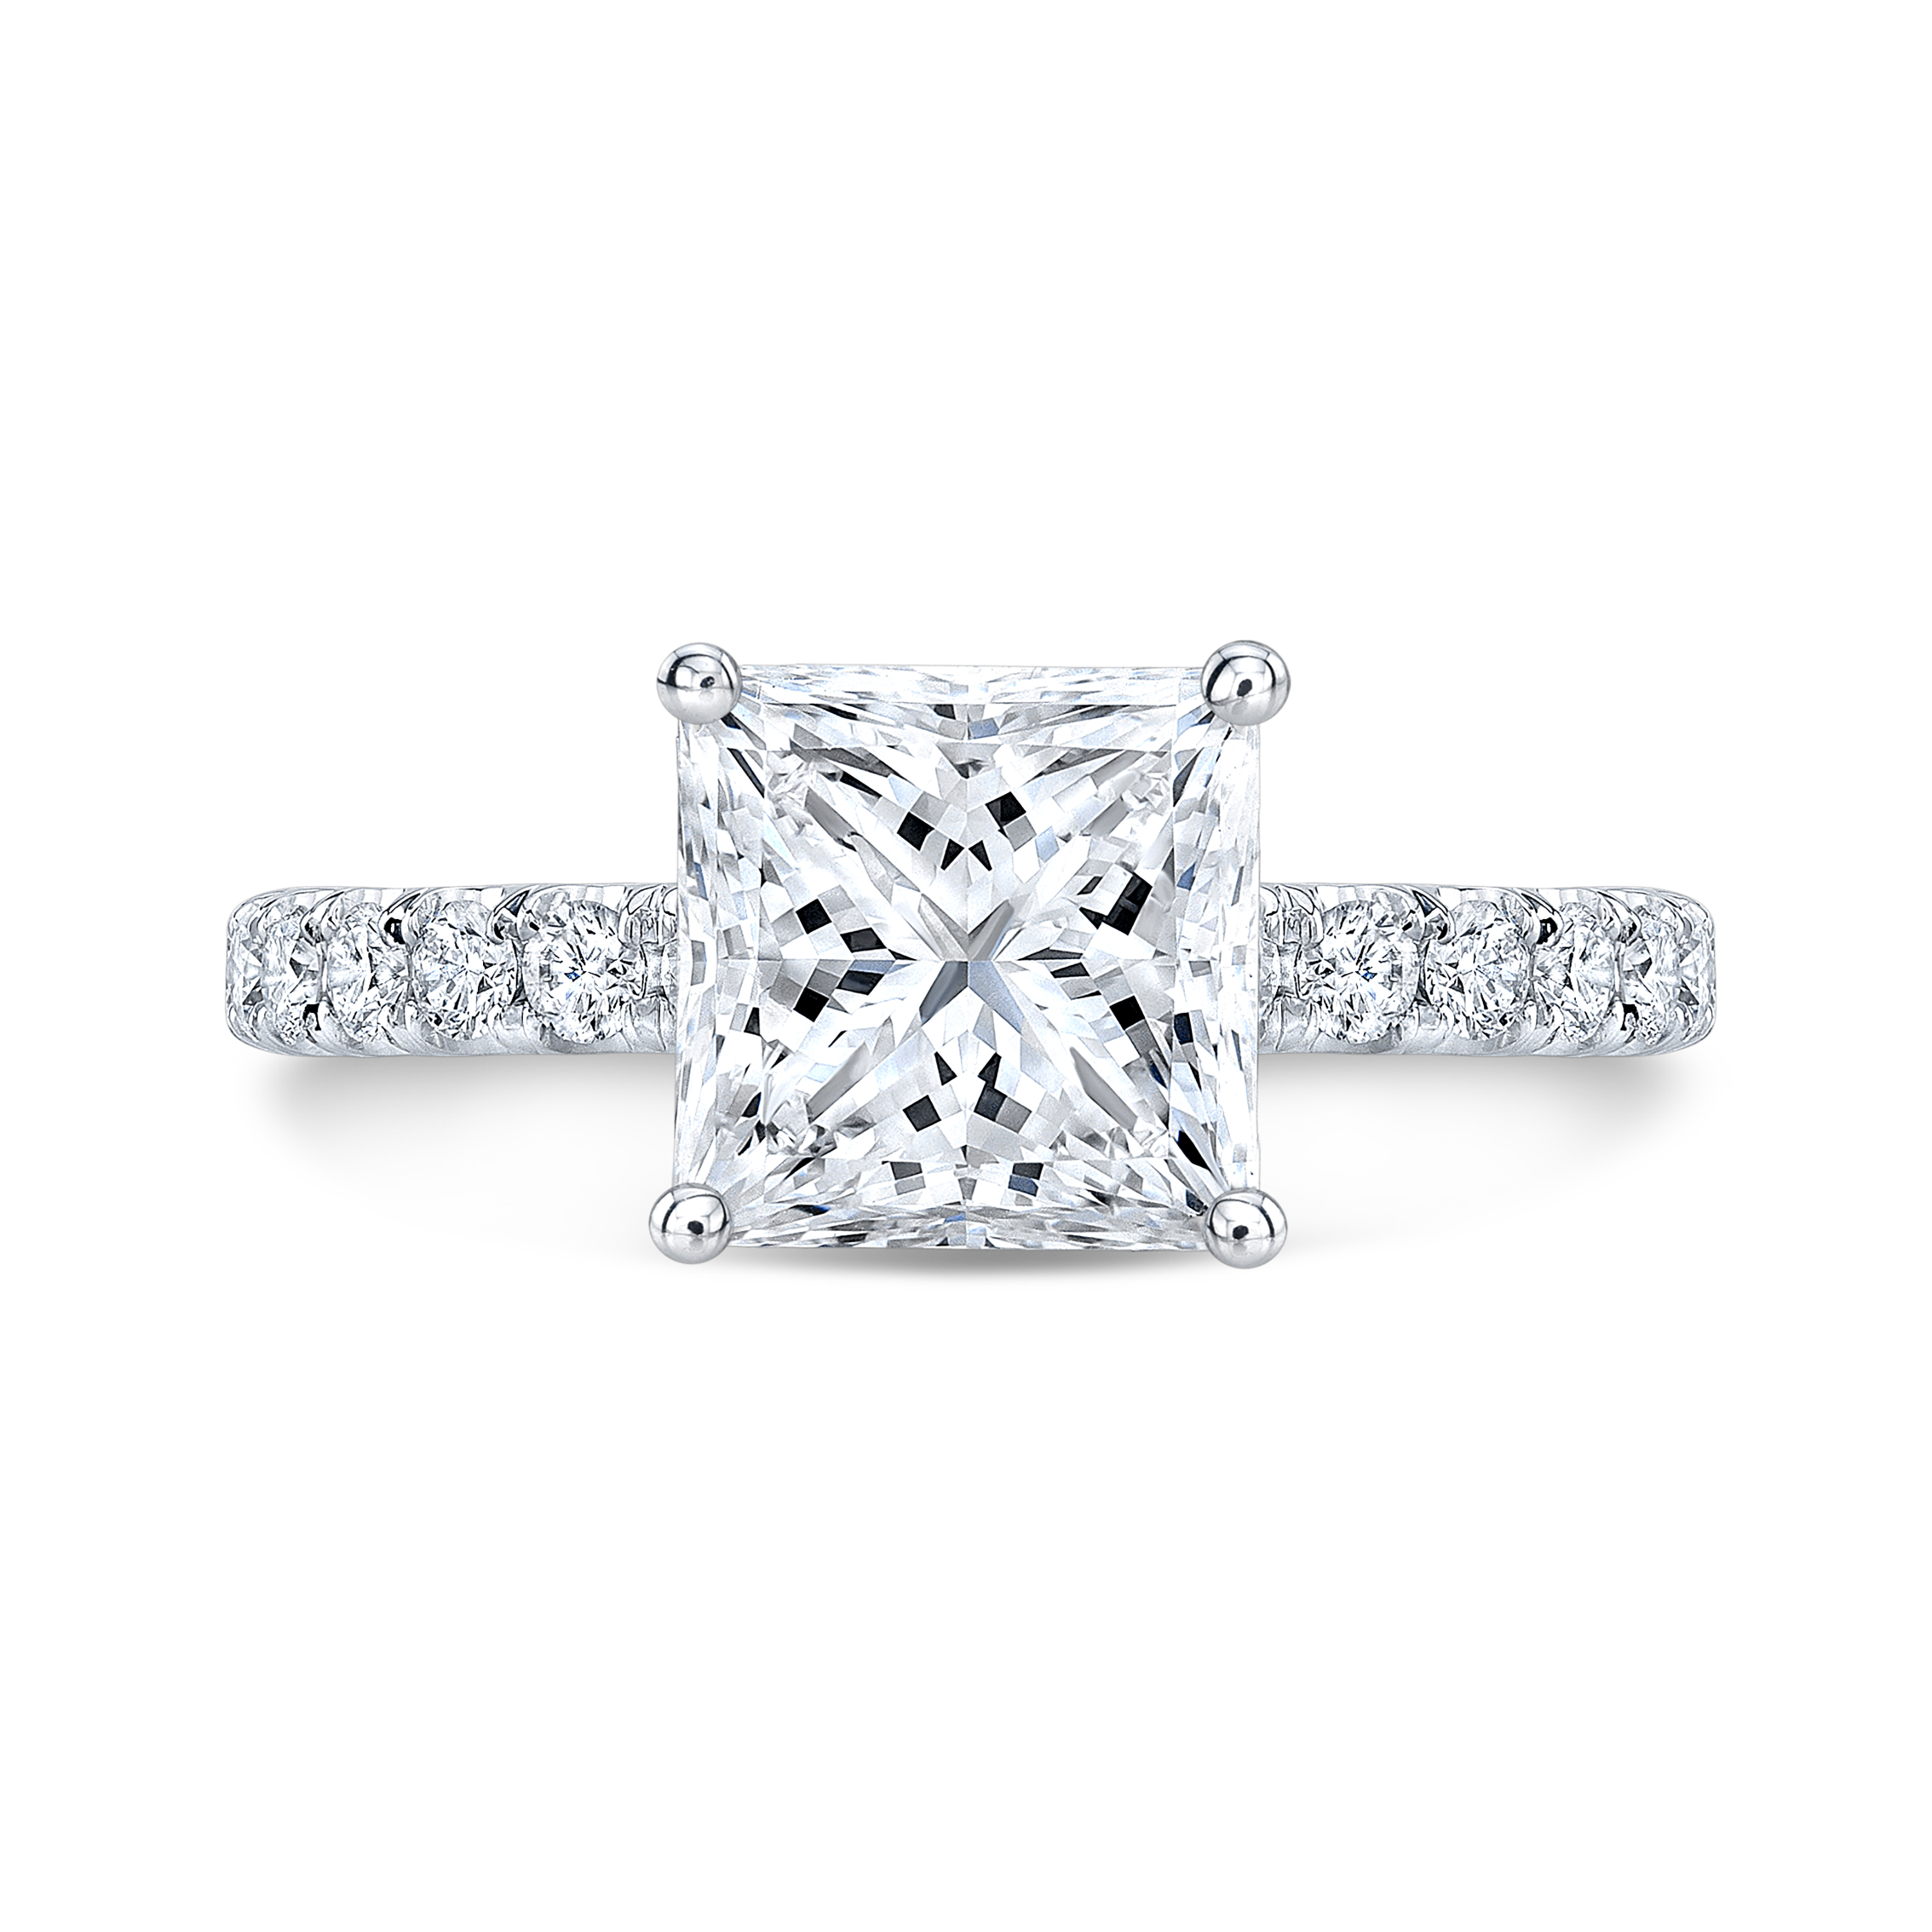 Princess Cut Diamond Engagement Rings: Explore 1ct, 2ct, 3ct+